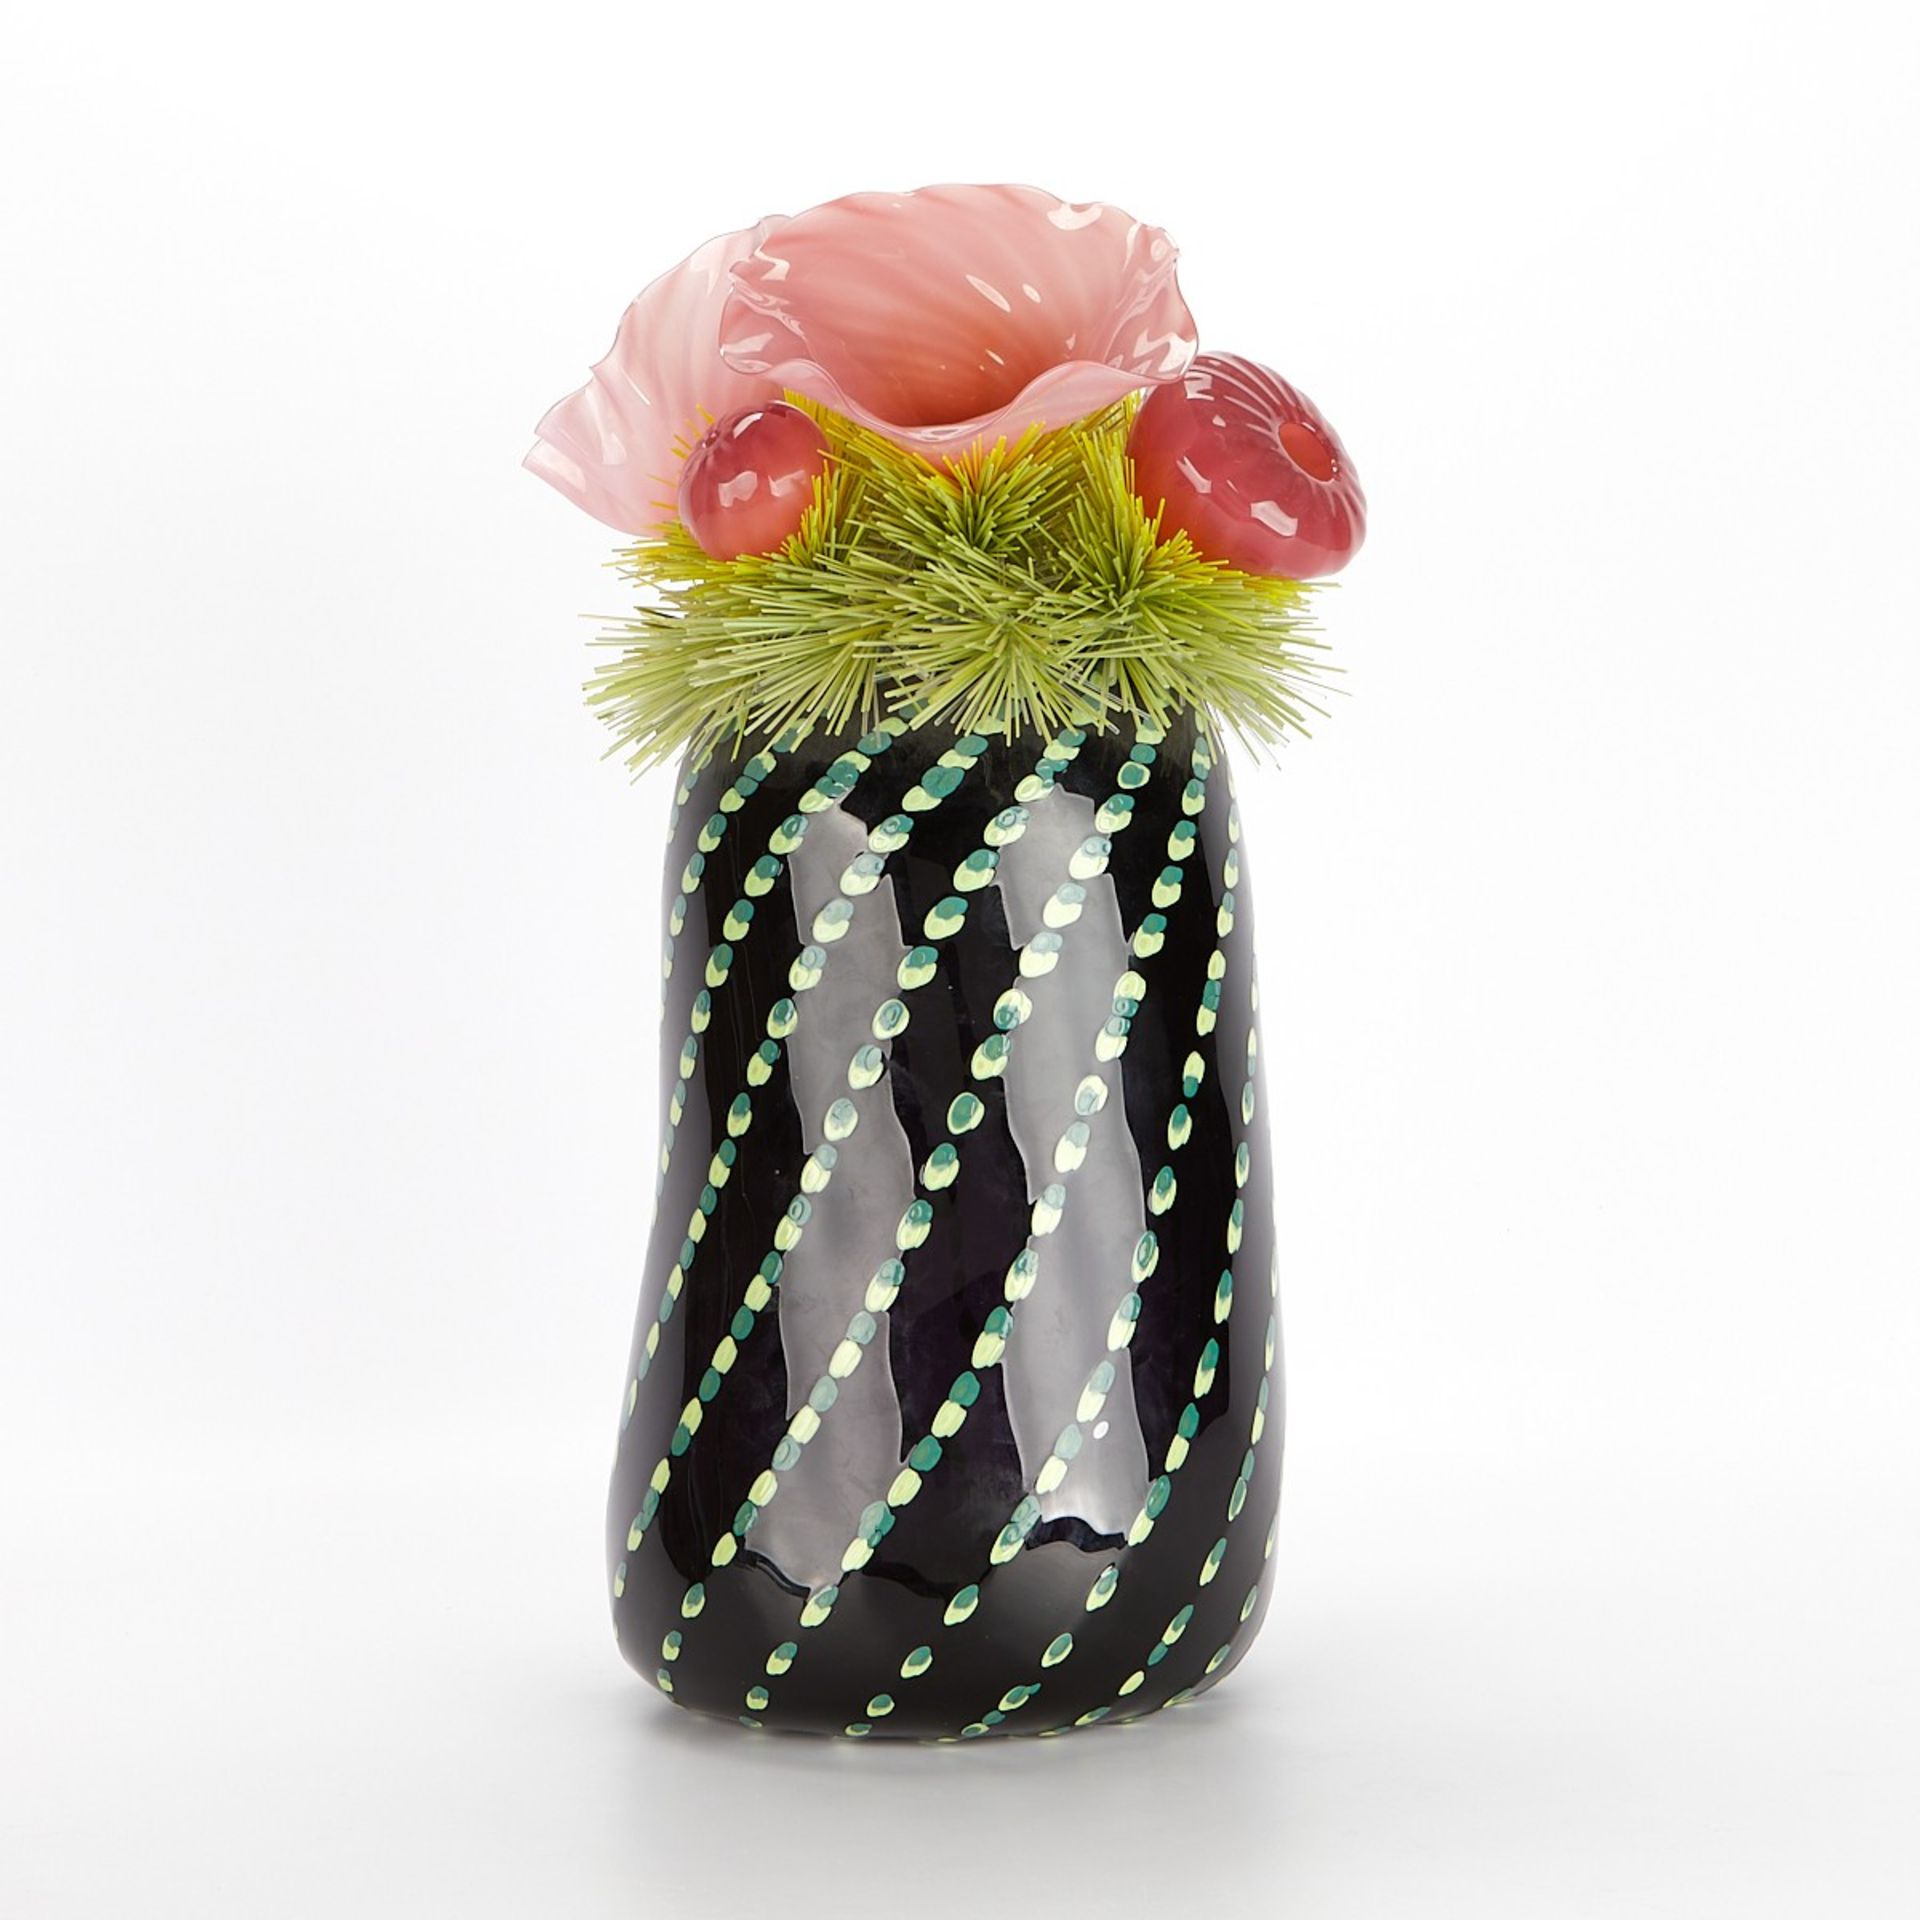 Flo Perkins "Chicago's Cactus" Glass Sculpture - Image 3 of 11